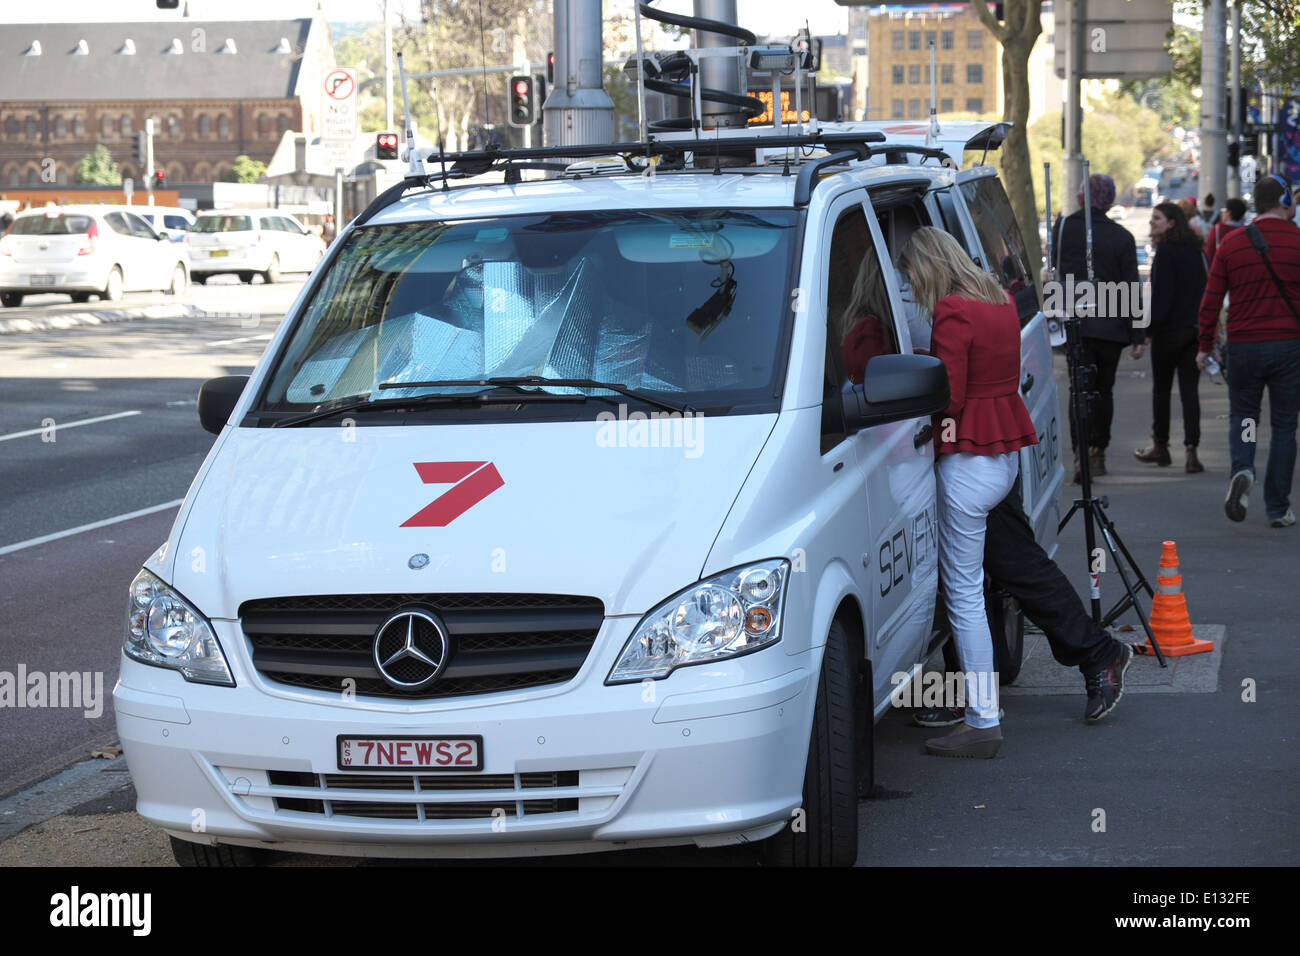 australian television channel 7 team covering strike at University of technology sydney,australia Stock Photo